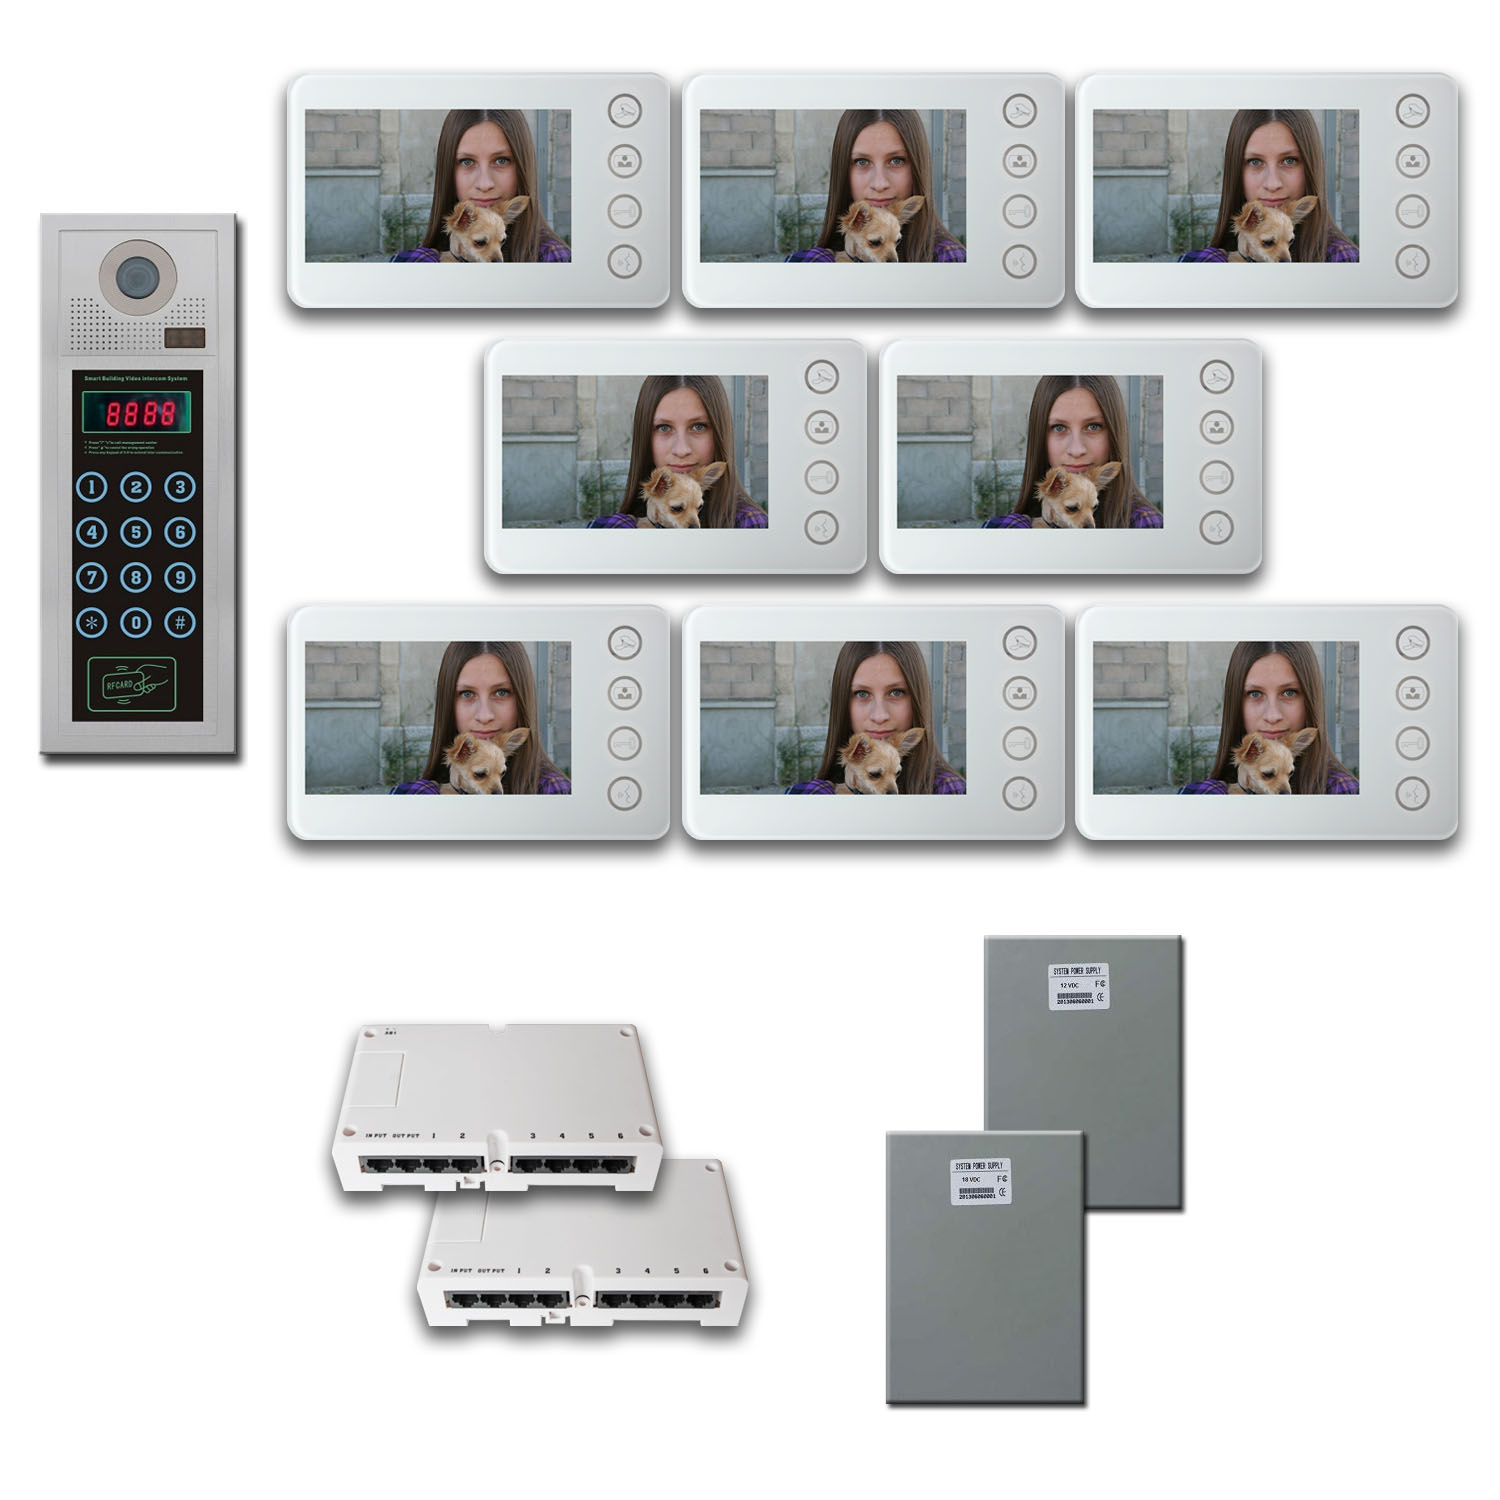 Multitenant Video Intercom (8) 5 inch color monitor door panel